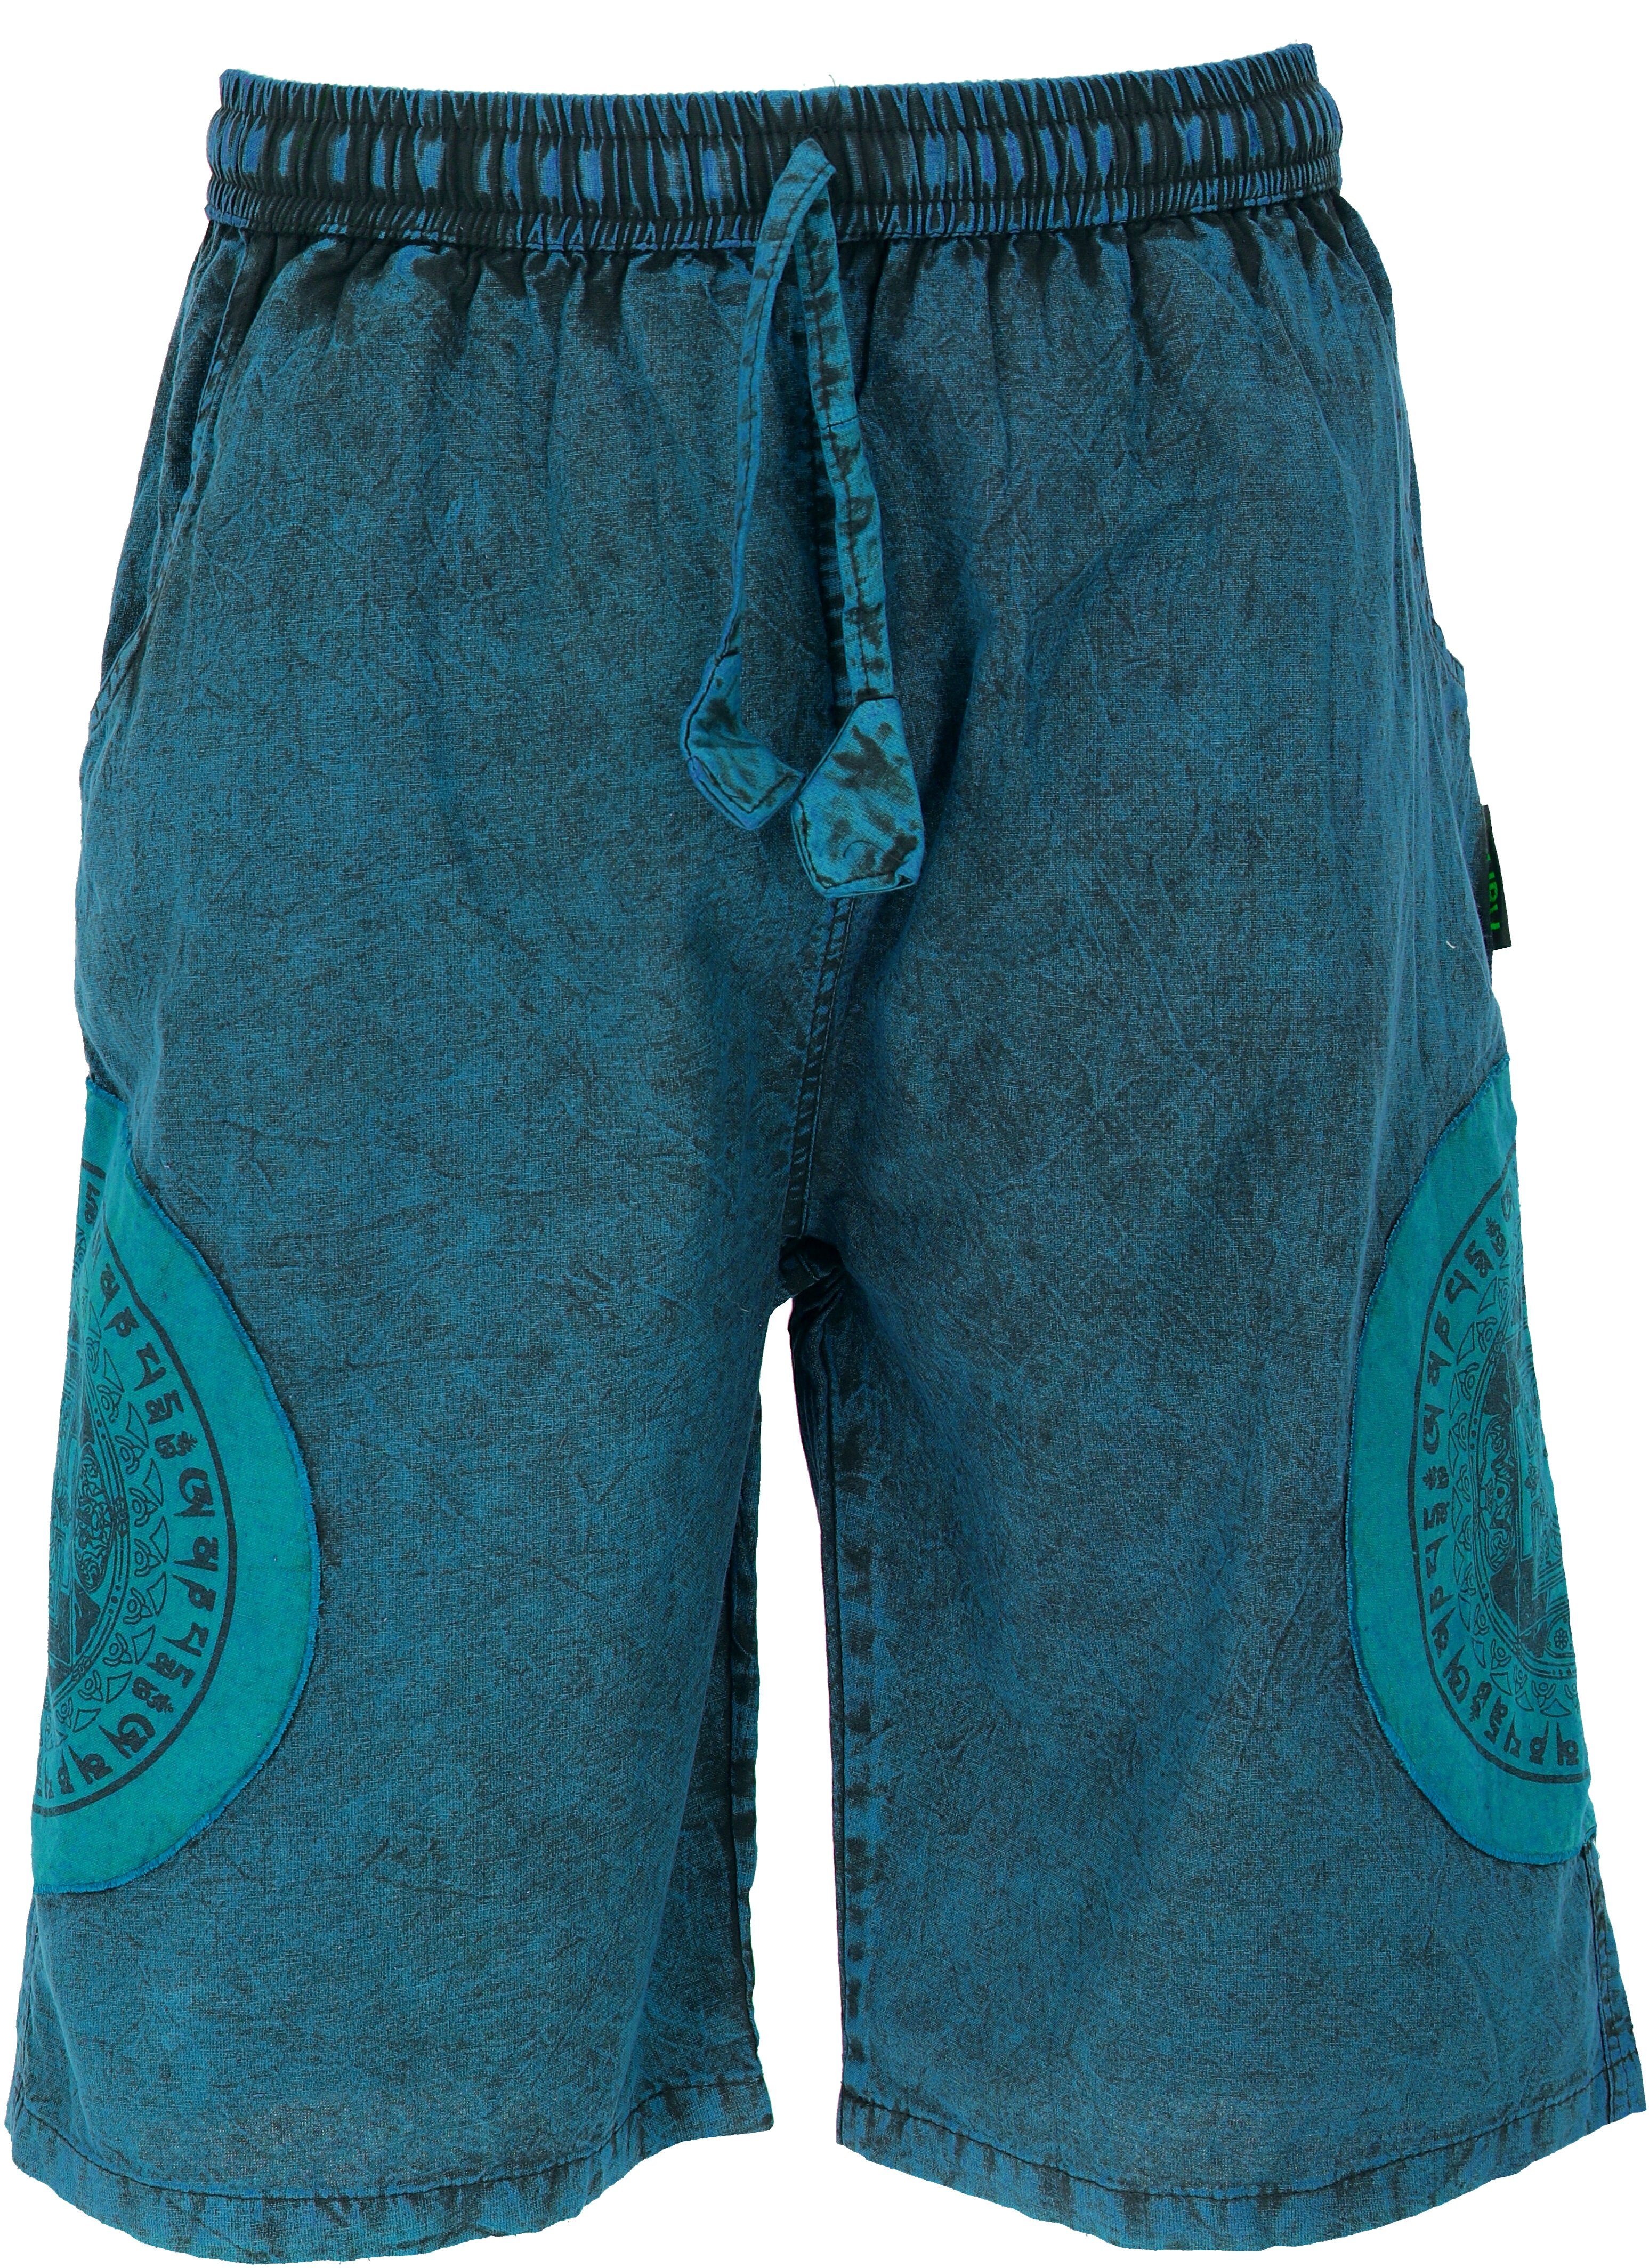 Guru-Shop Relaxhose Ethno Yogashorts, Stonwasch Patchwork Shorts.. Hippie, Ethno Style, alternative Bekleidung blau